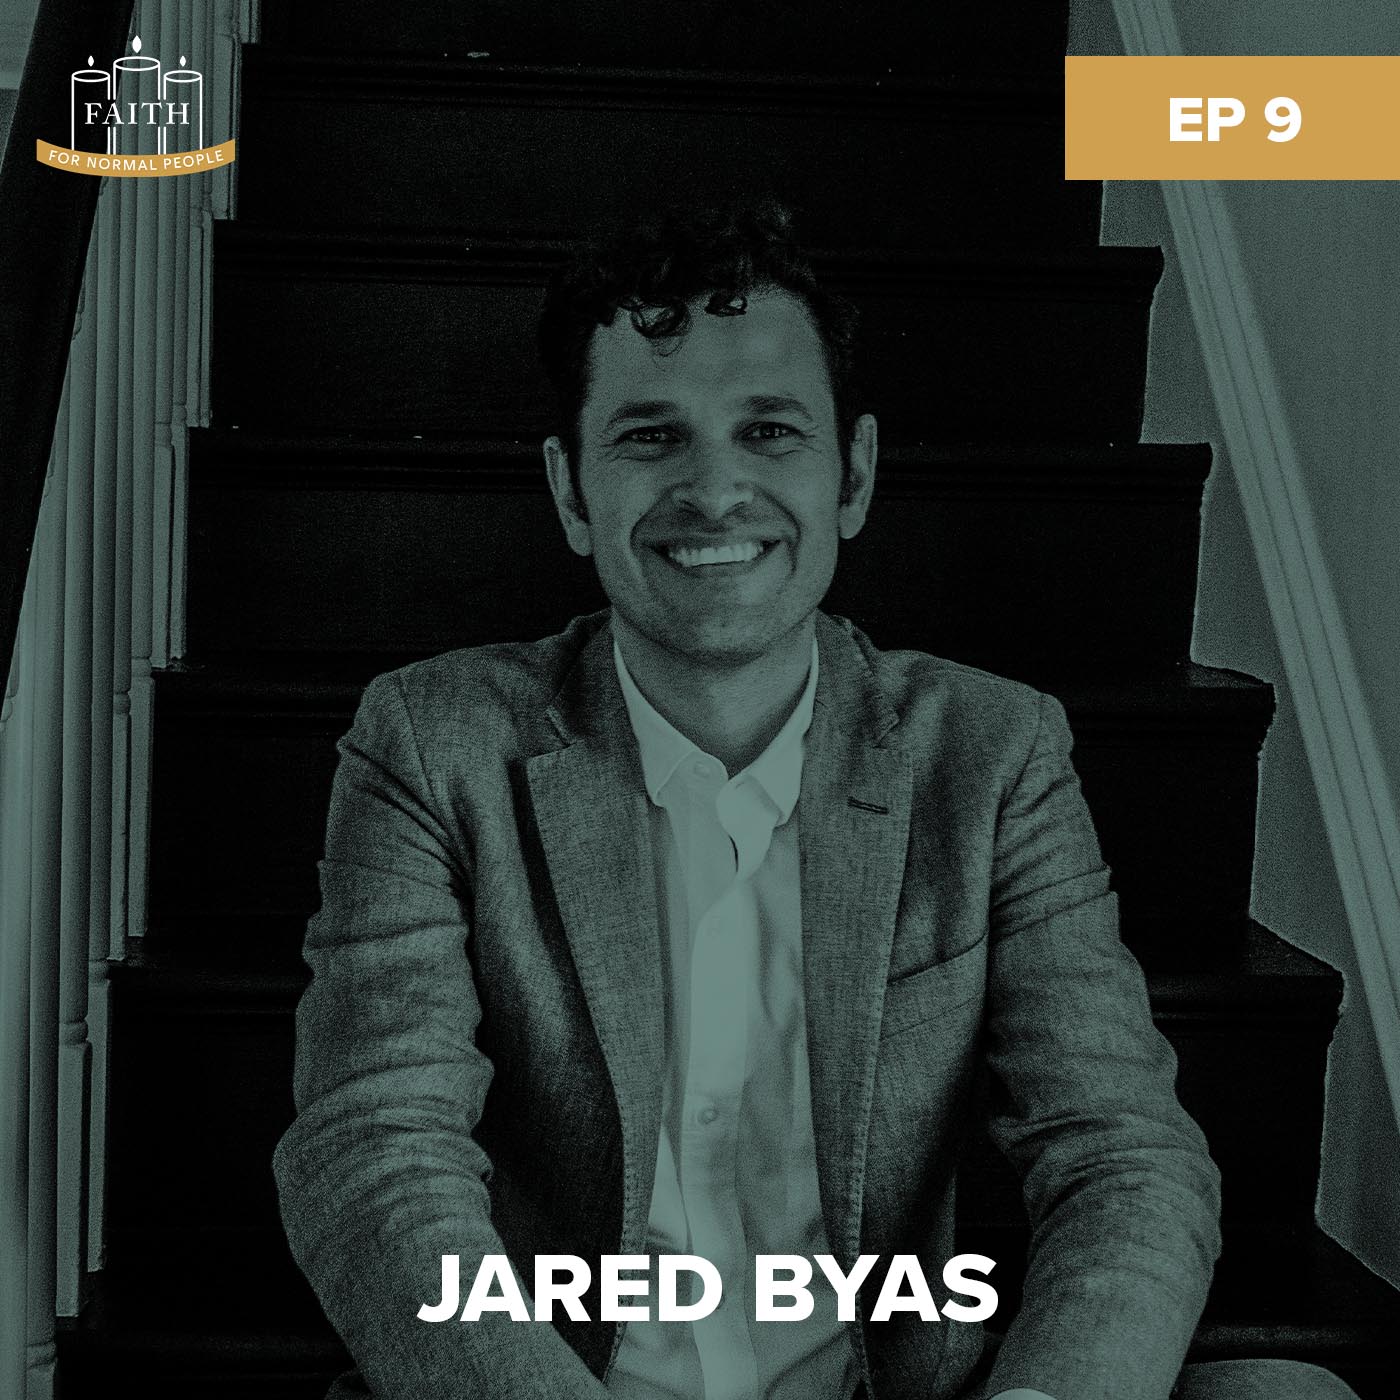 Episode 9: Jared Byas – The Genesis of Jared Byas